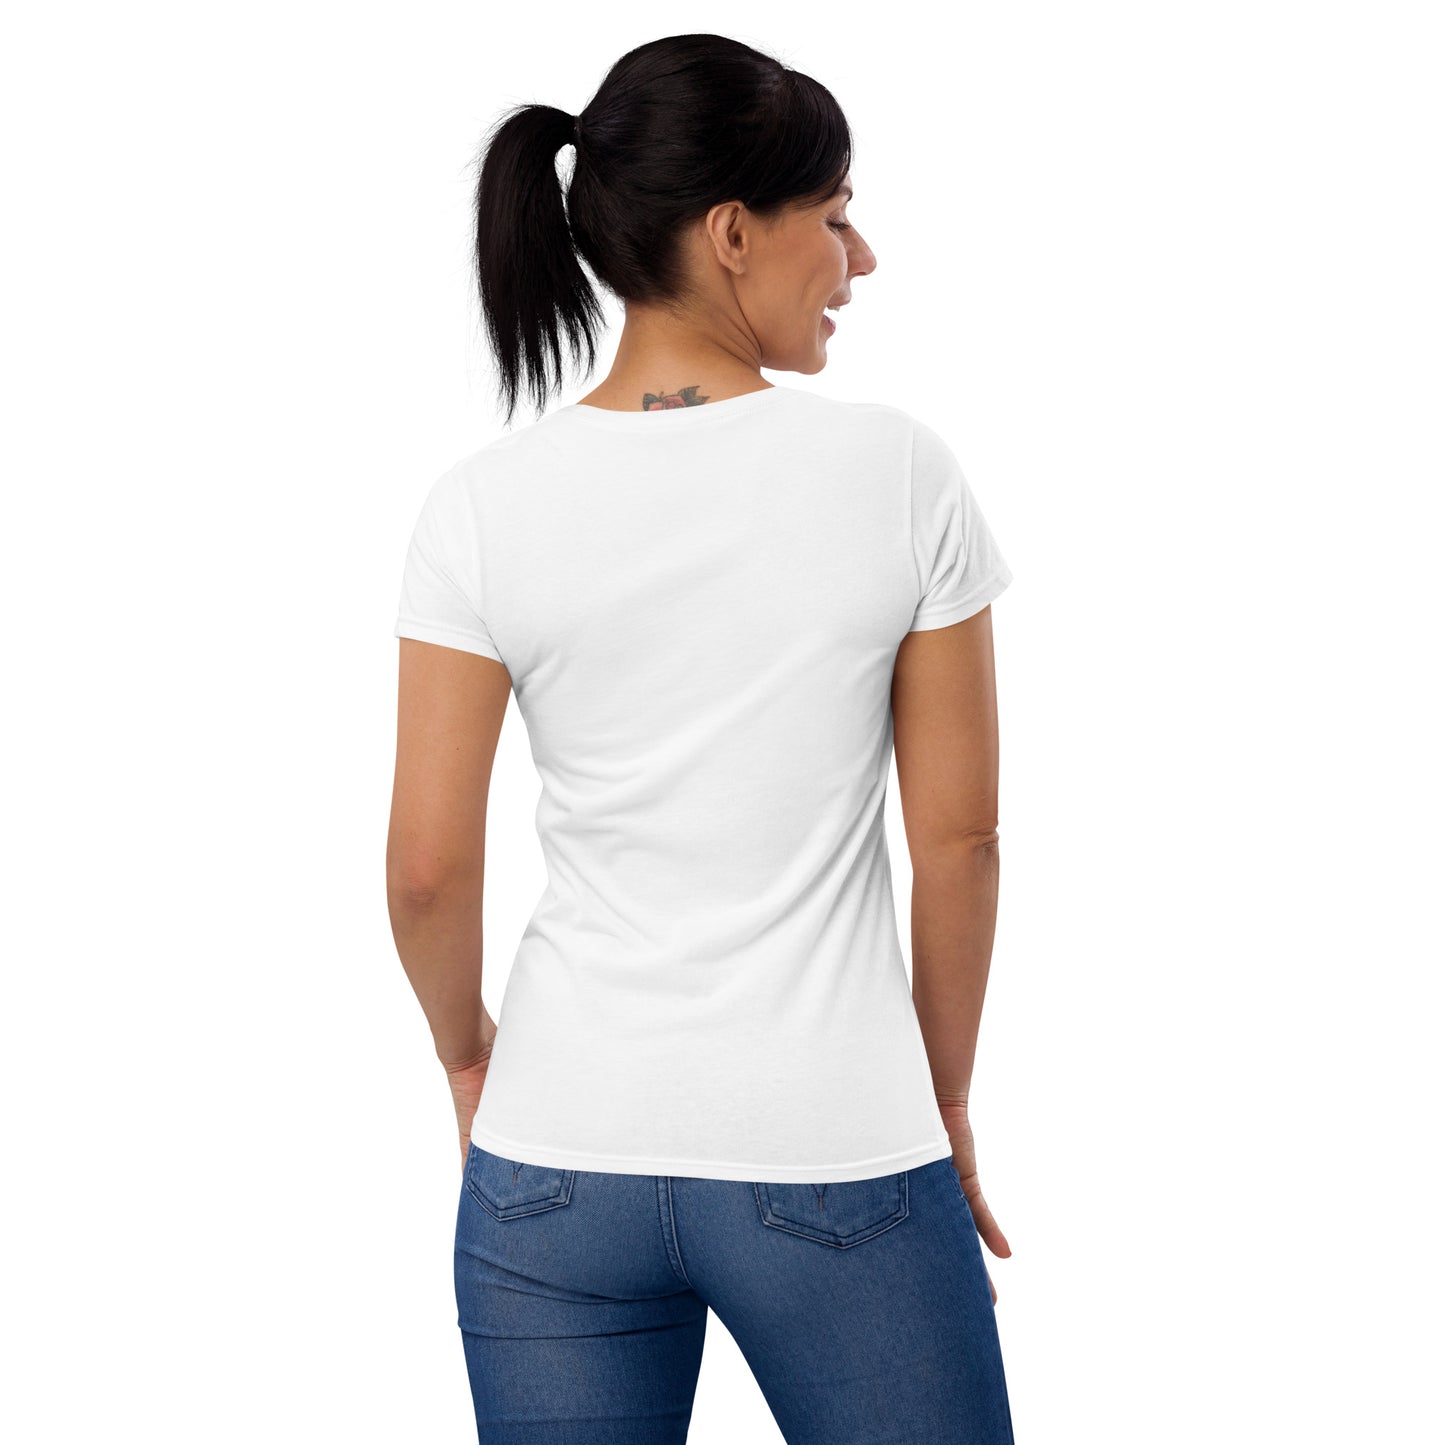 #crystallife Women's short sleeve t-shirt